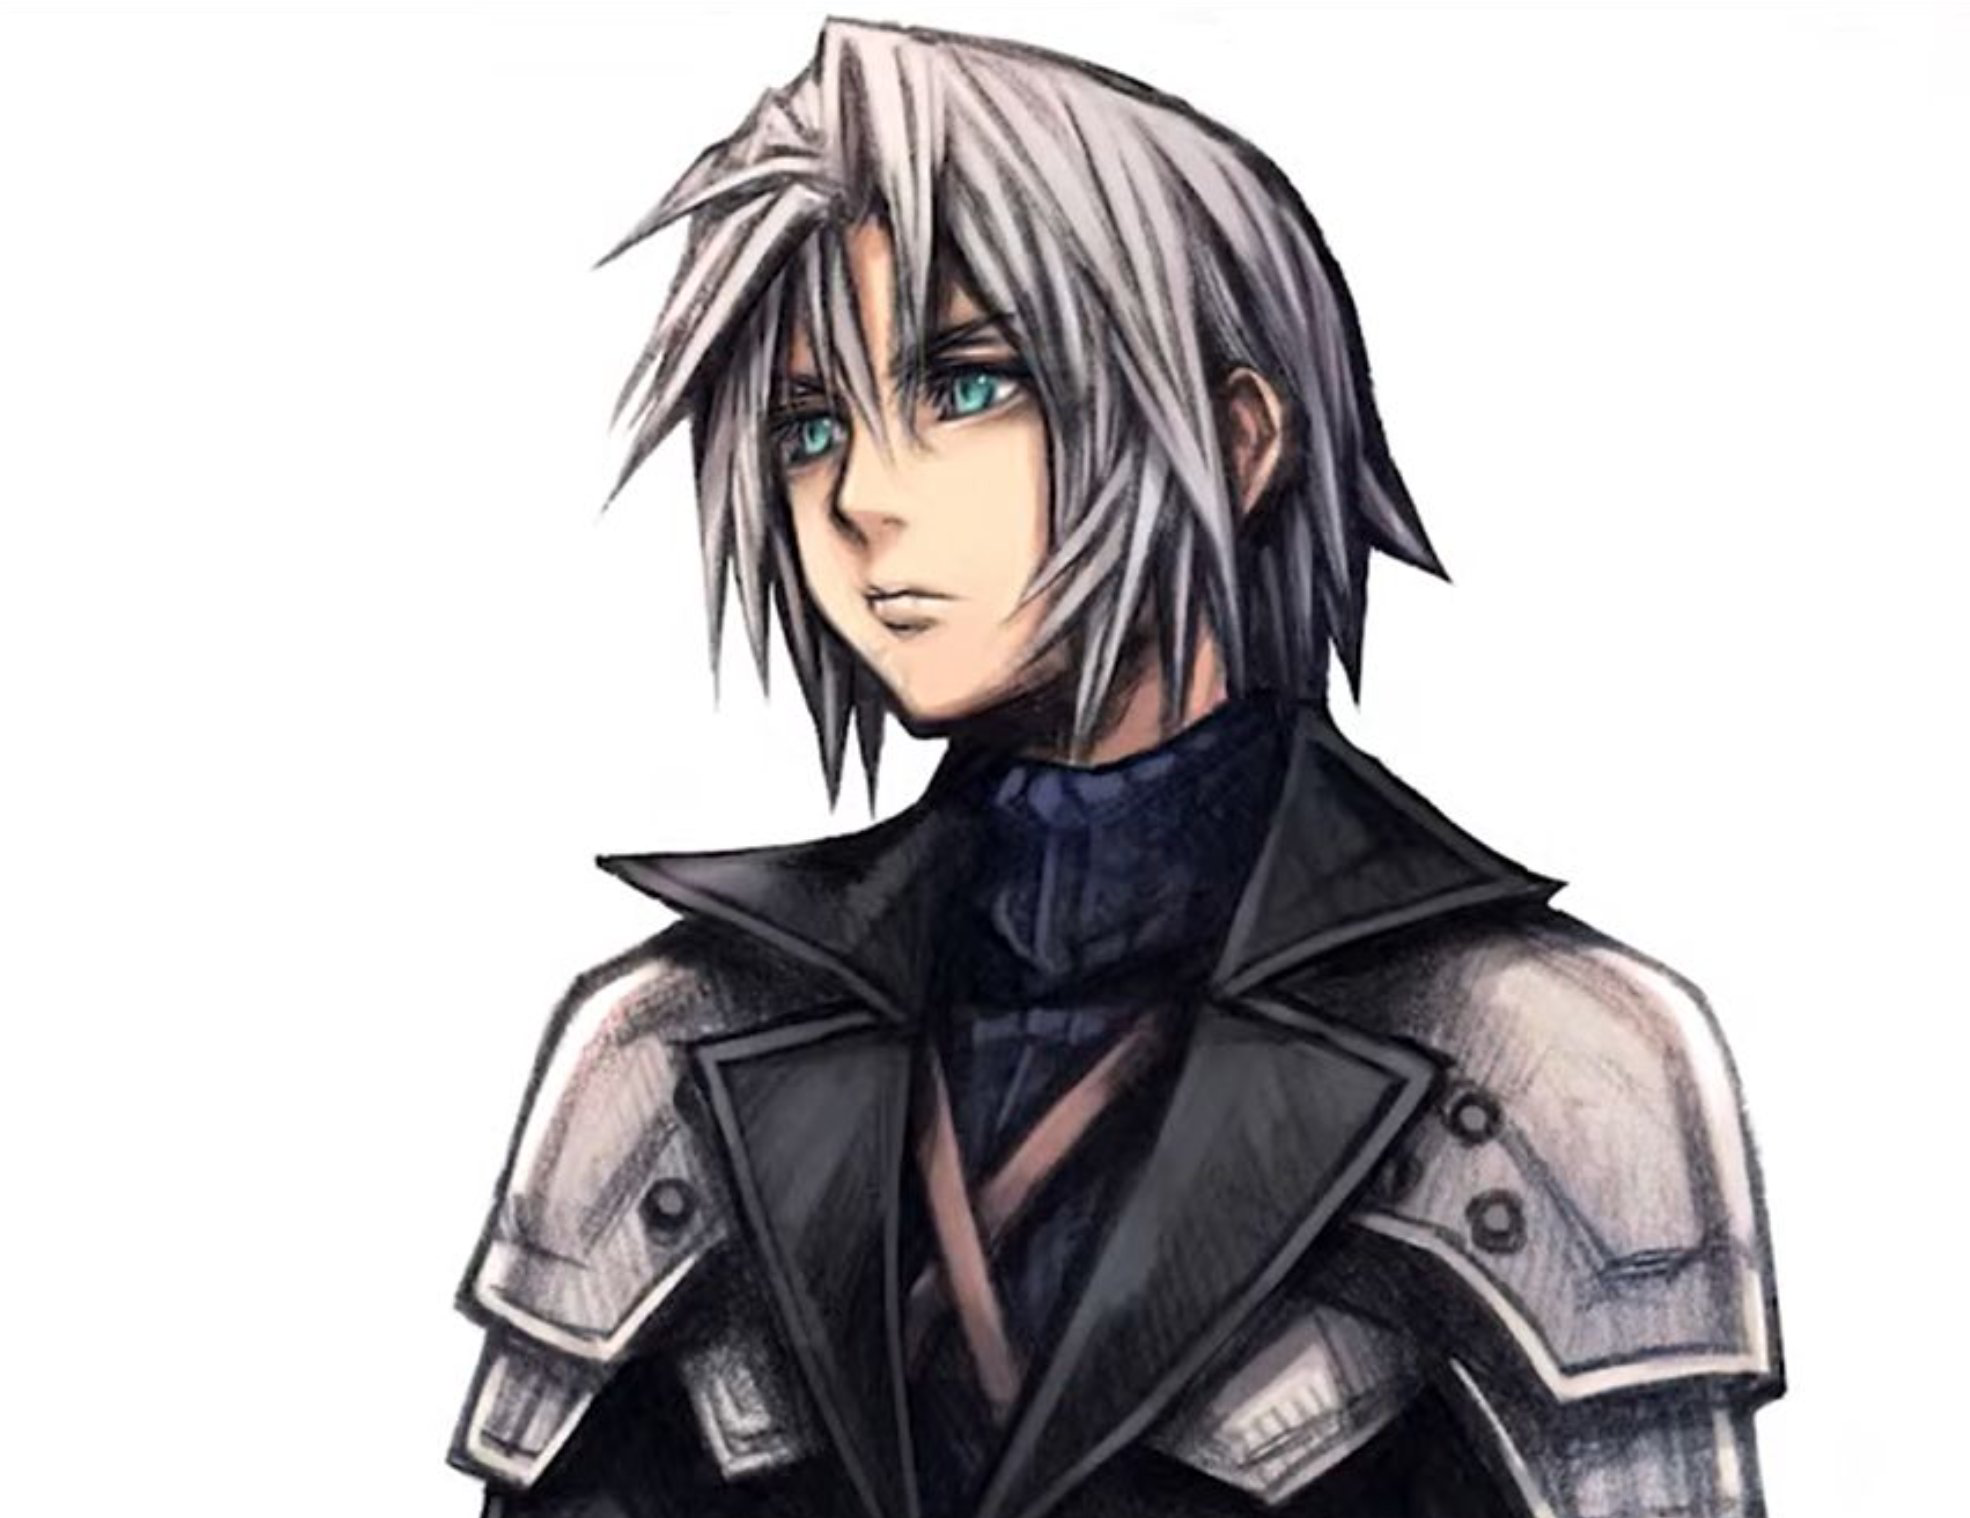 Final Fantasy VII Reveals New Young Sephiroth Artwork by Tetsuya Nomura